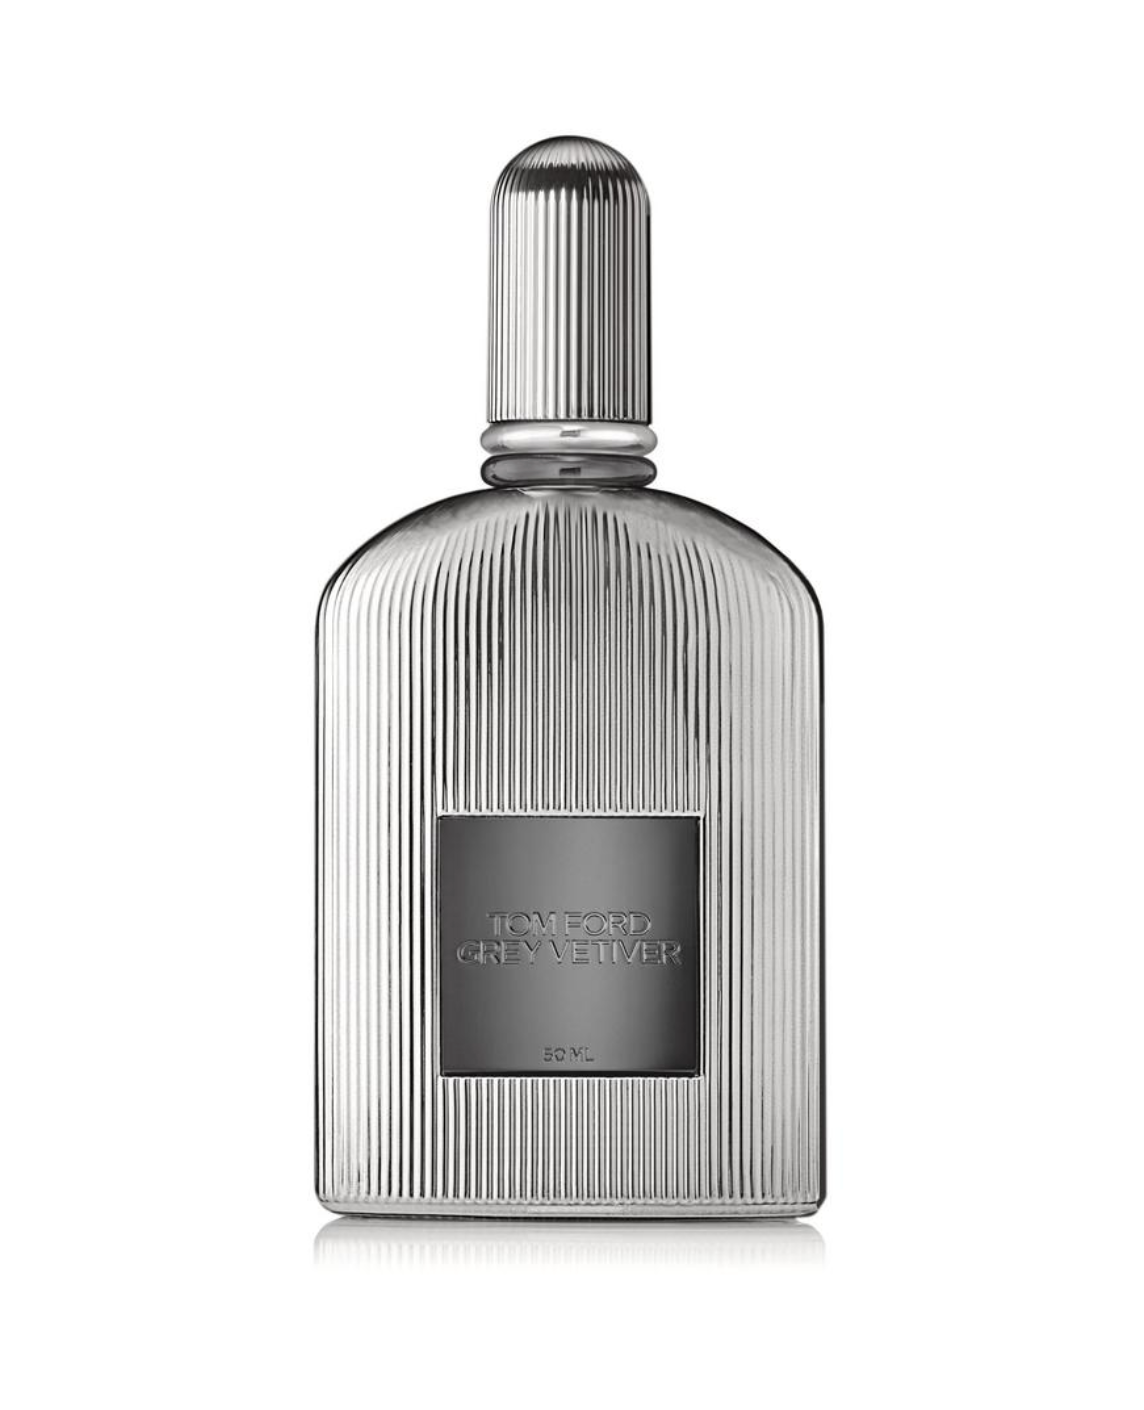 Tom Ford Grey Vetiver Parfum Sample